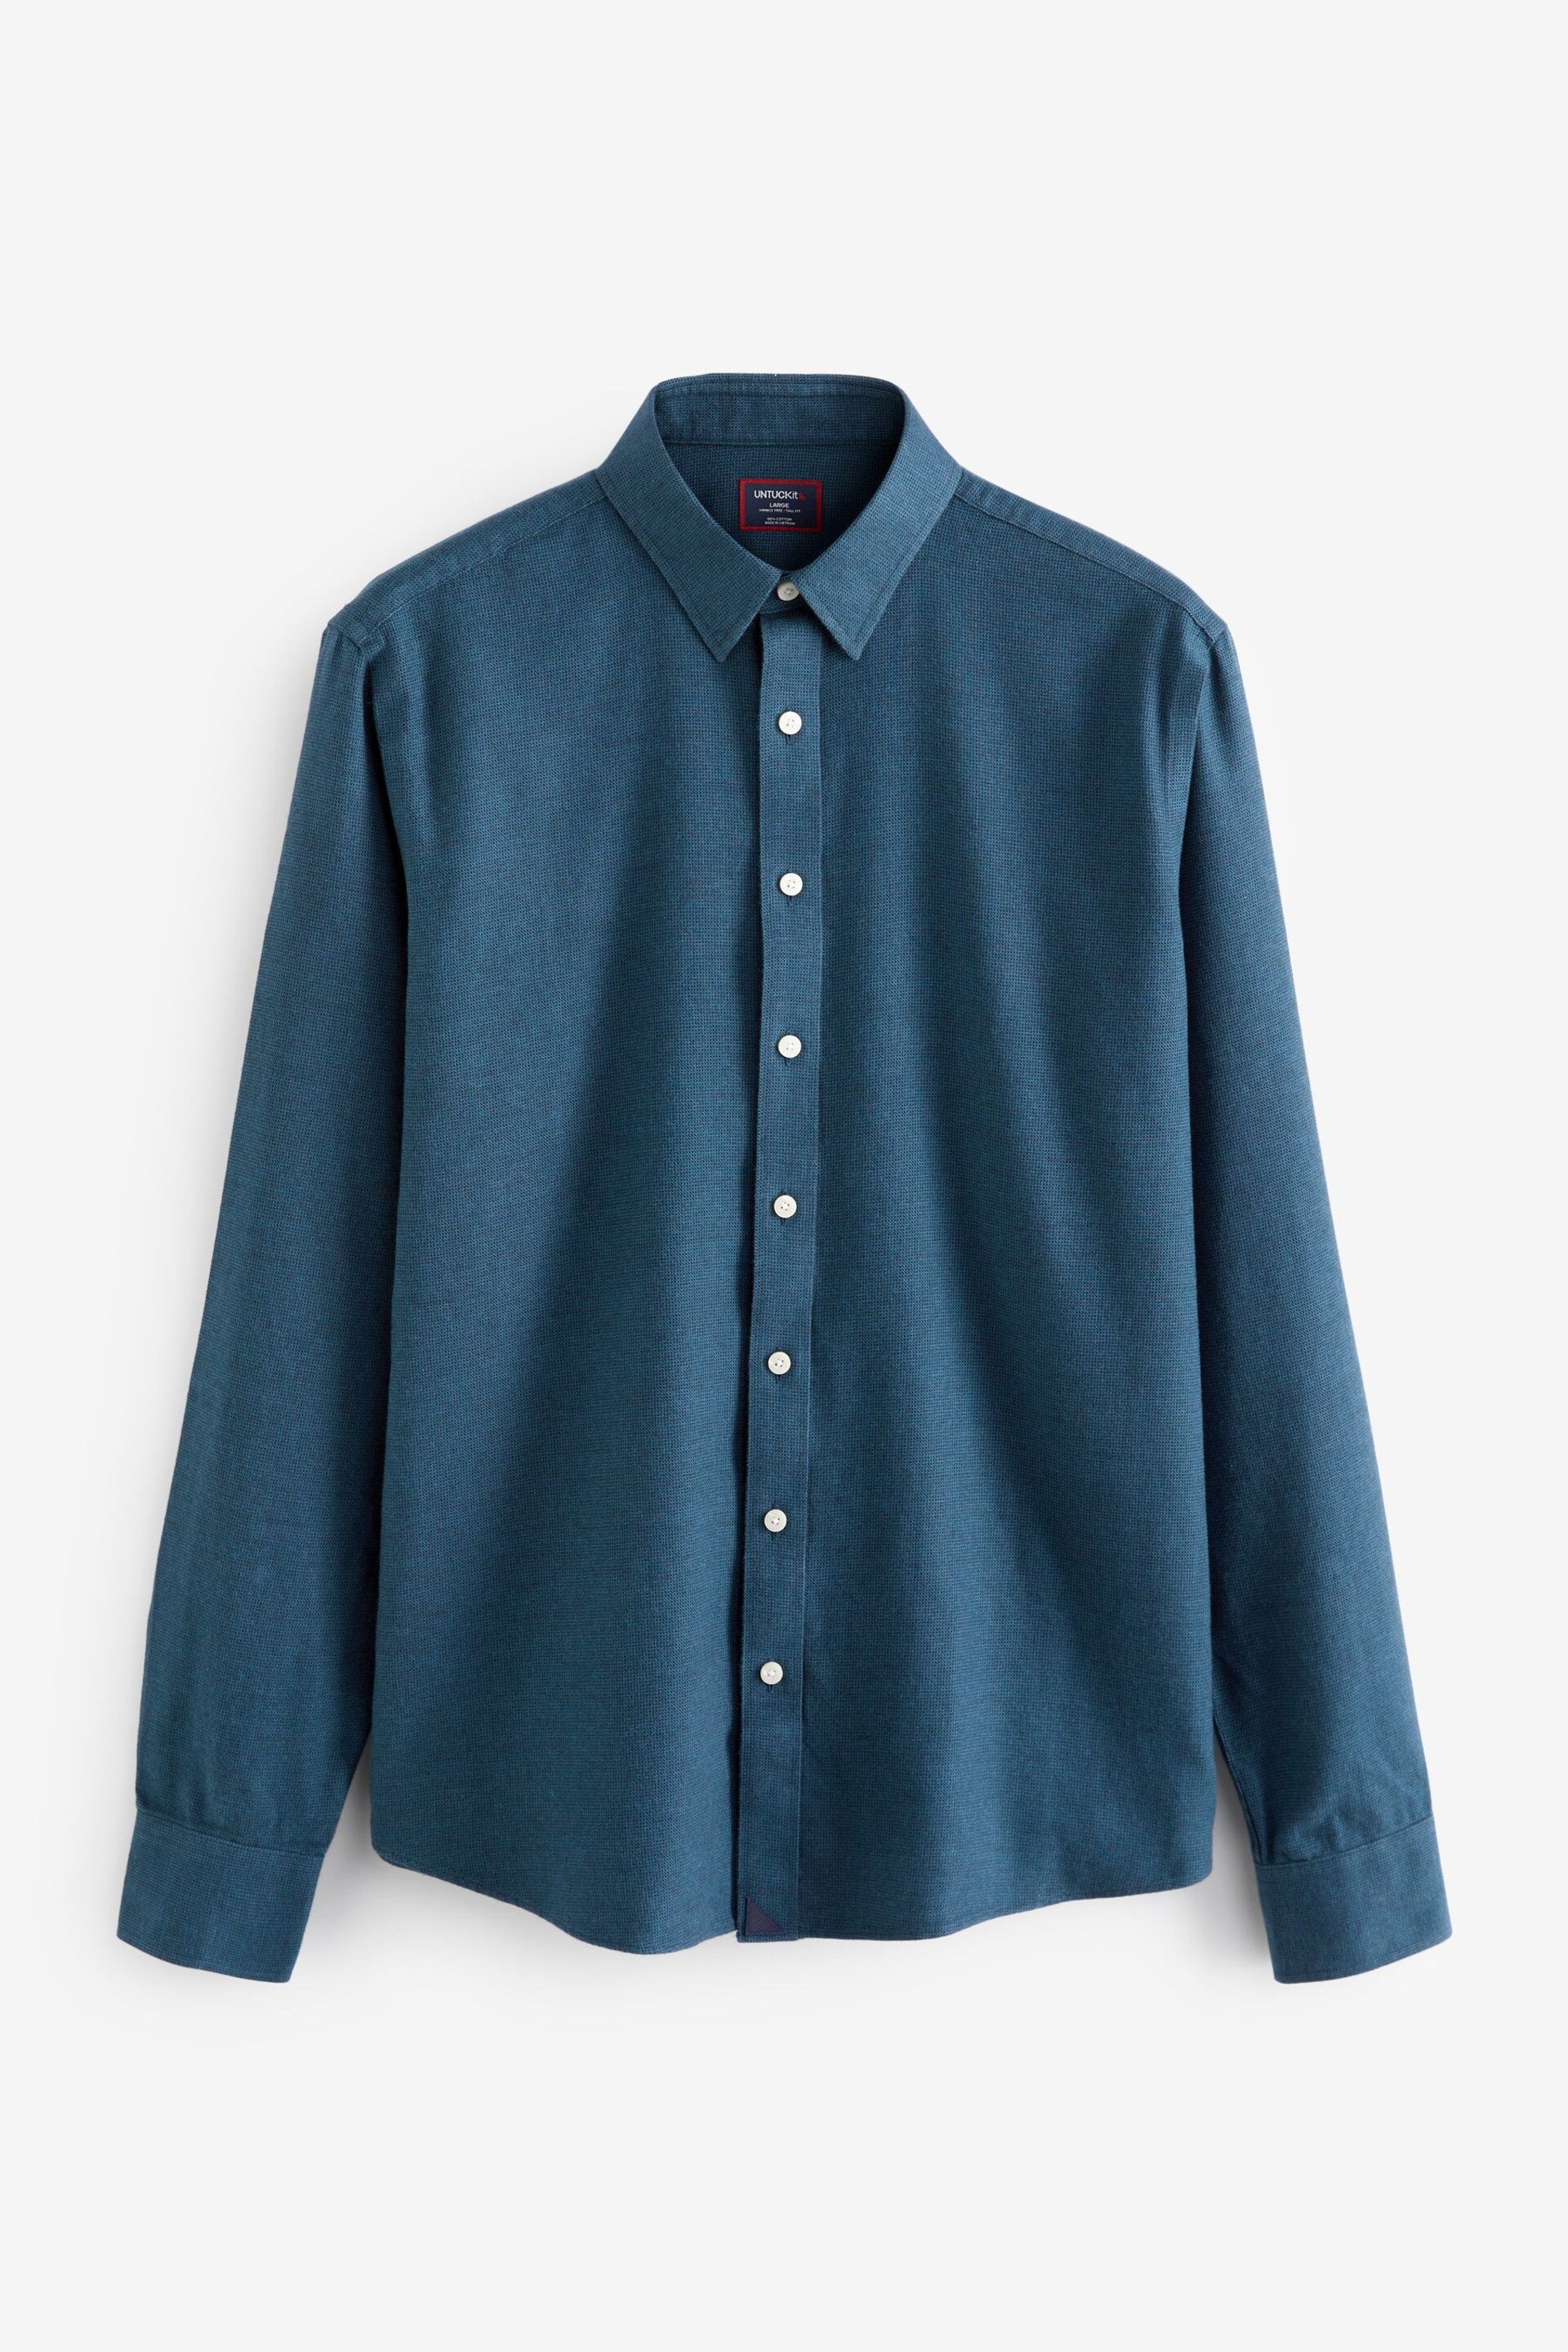 UNTUCKit Blue Light Wrinkle-Free Regular Fit Veneto Shirt - Image 5 of 5